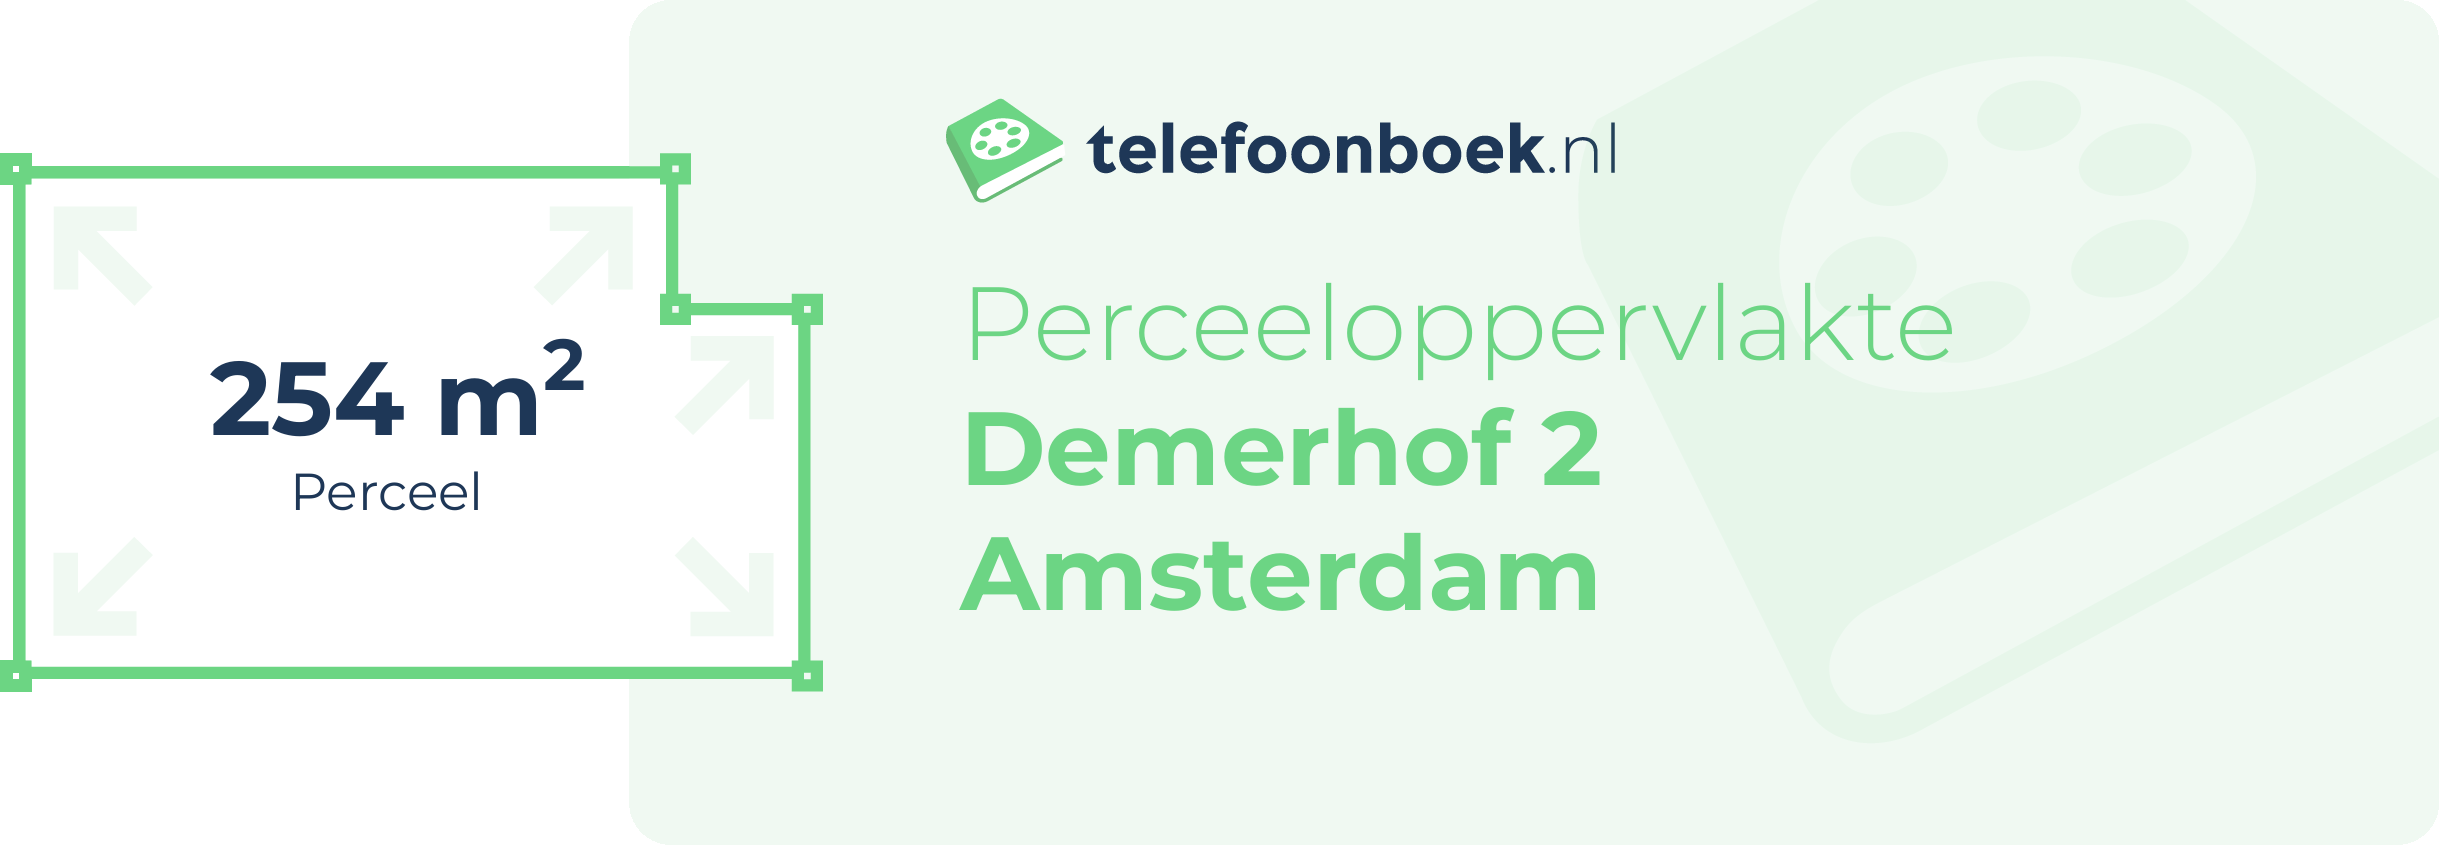 Perceeloppervlakte Demerhof 2 Amsterdam